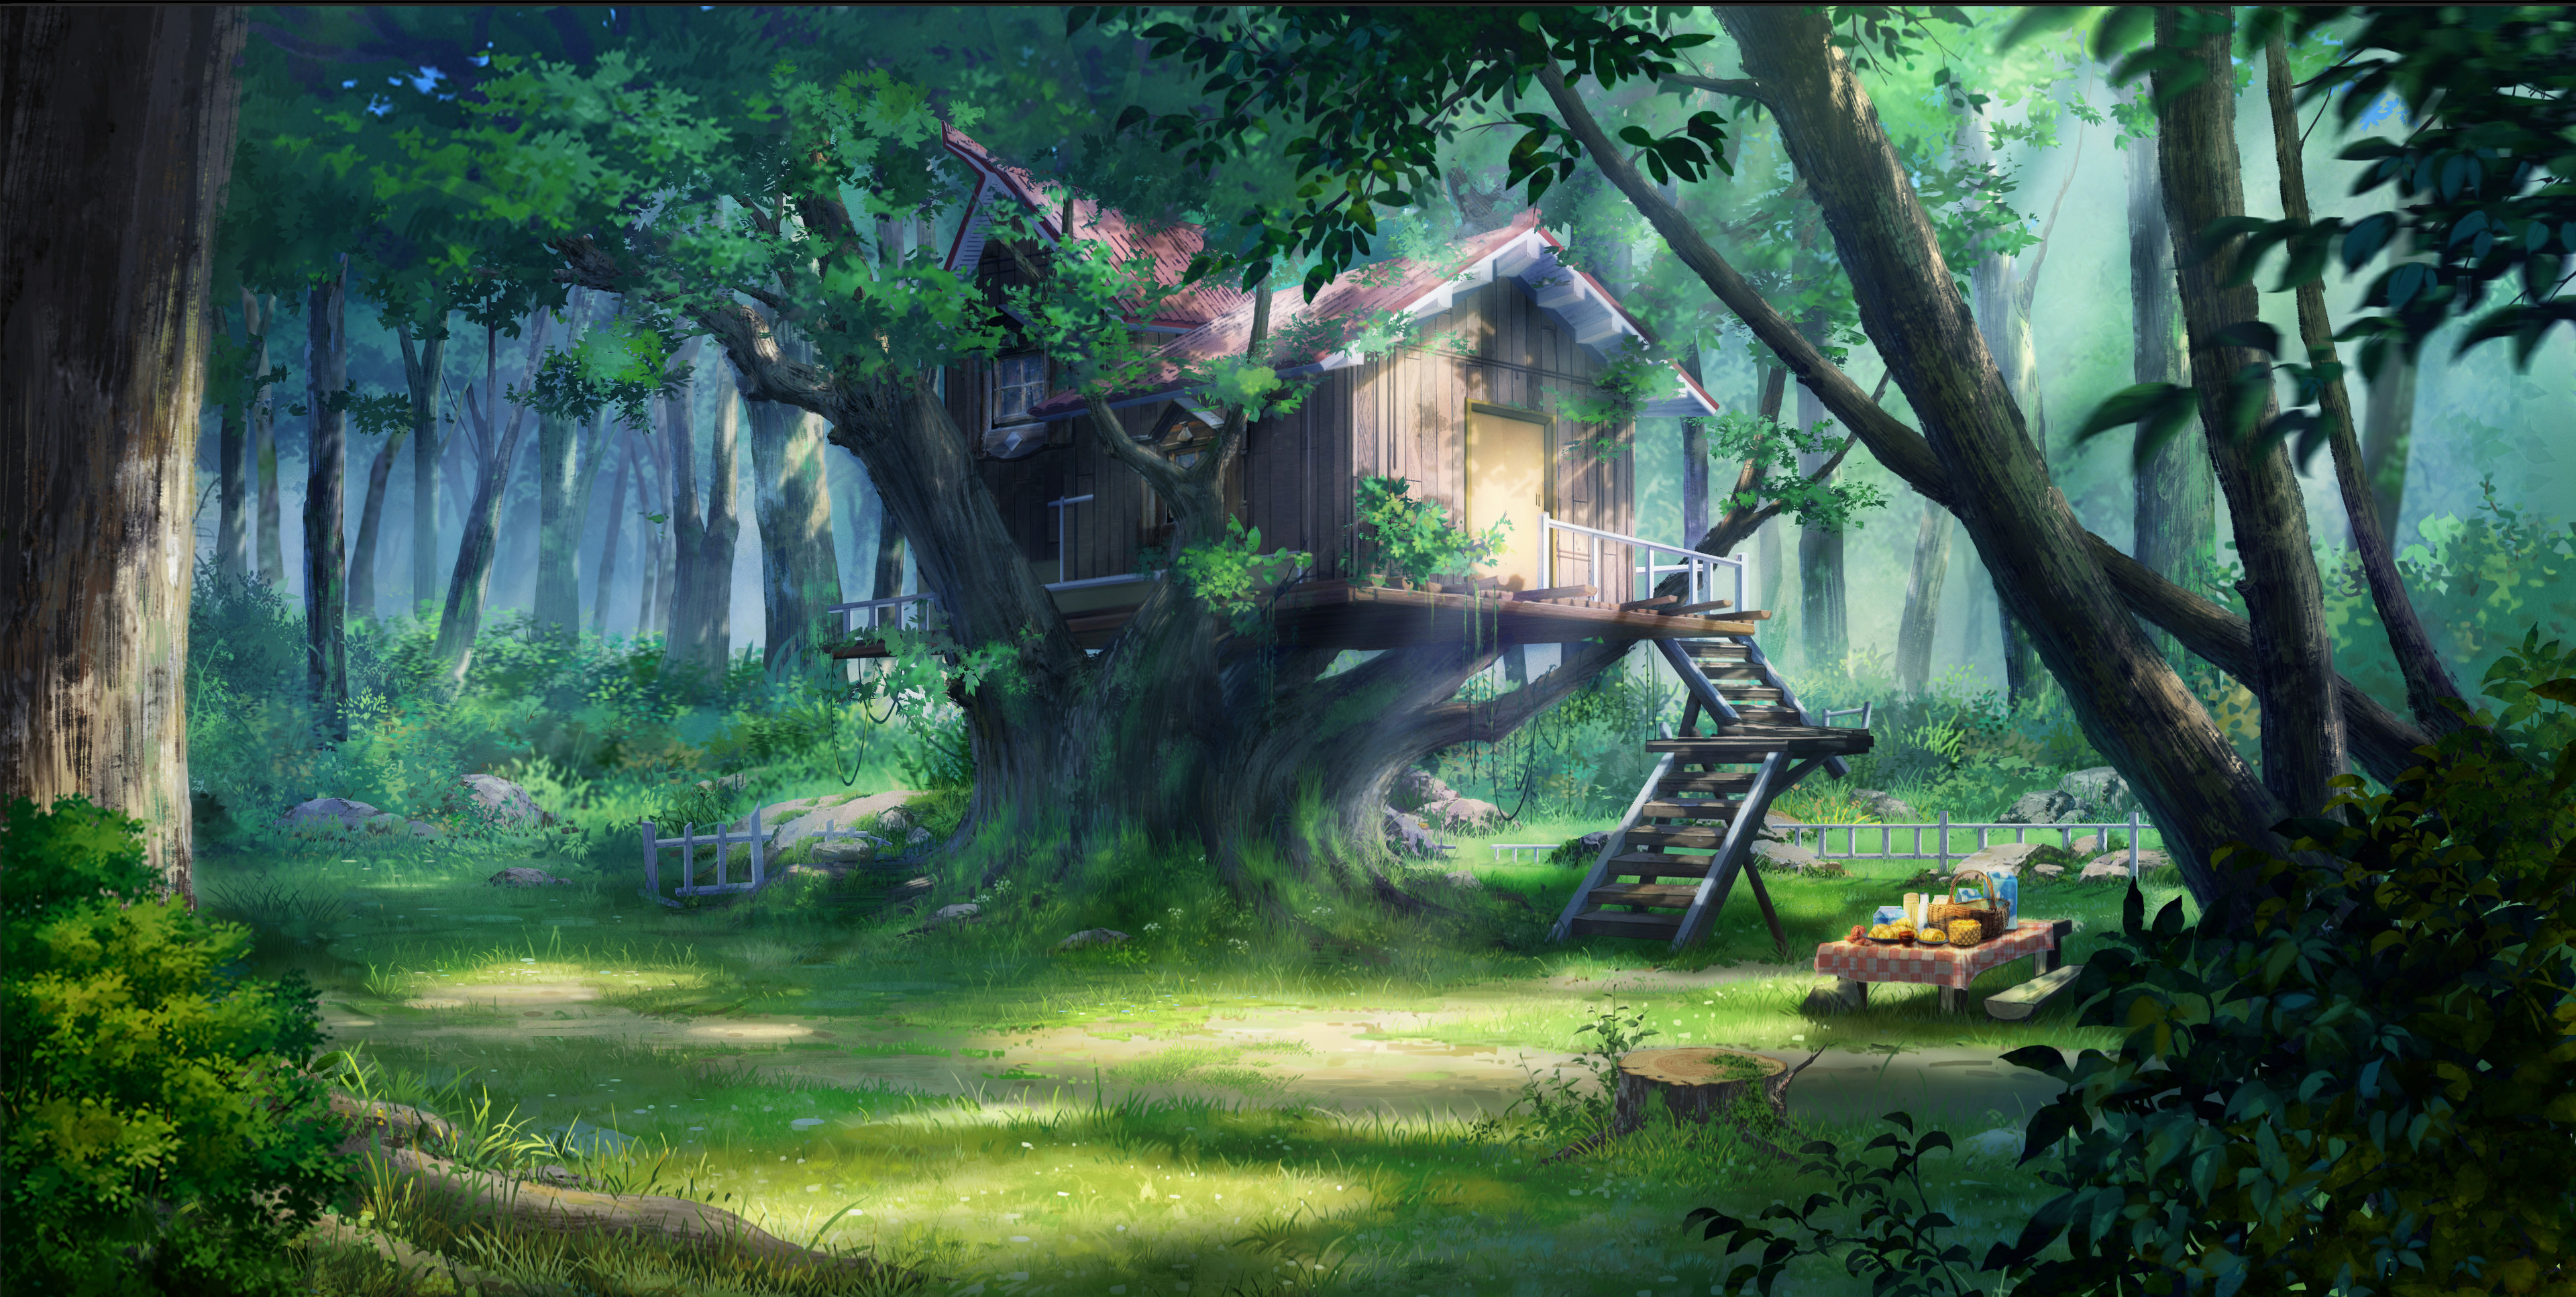 General 3840x1933 digital art artwork illustration landscape nature forest trees tree house house grass picnic